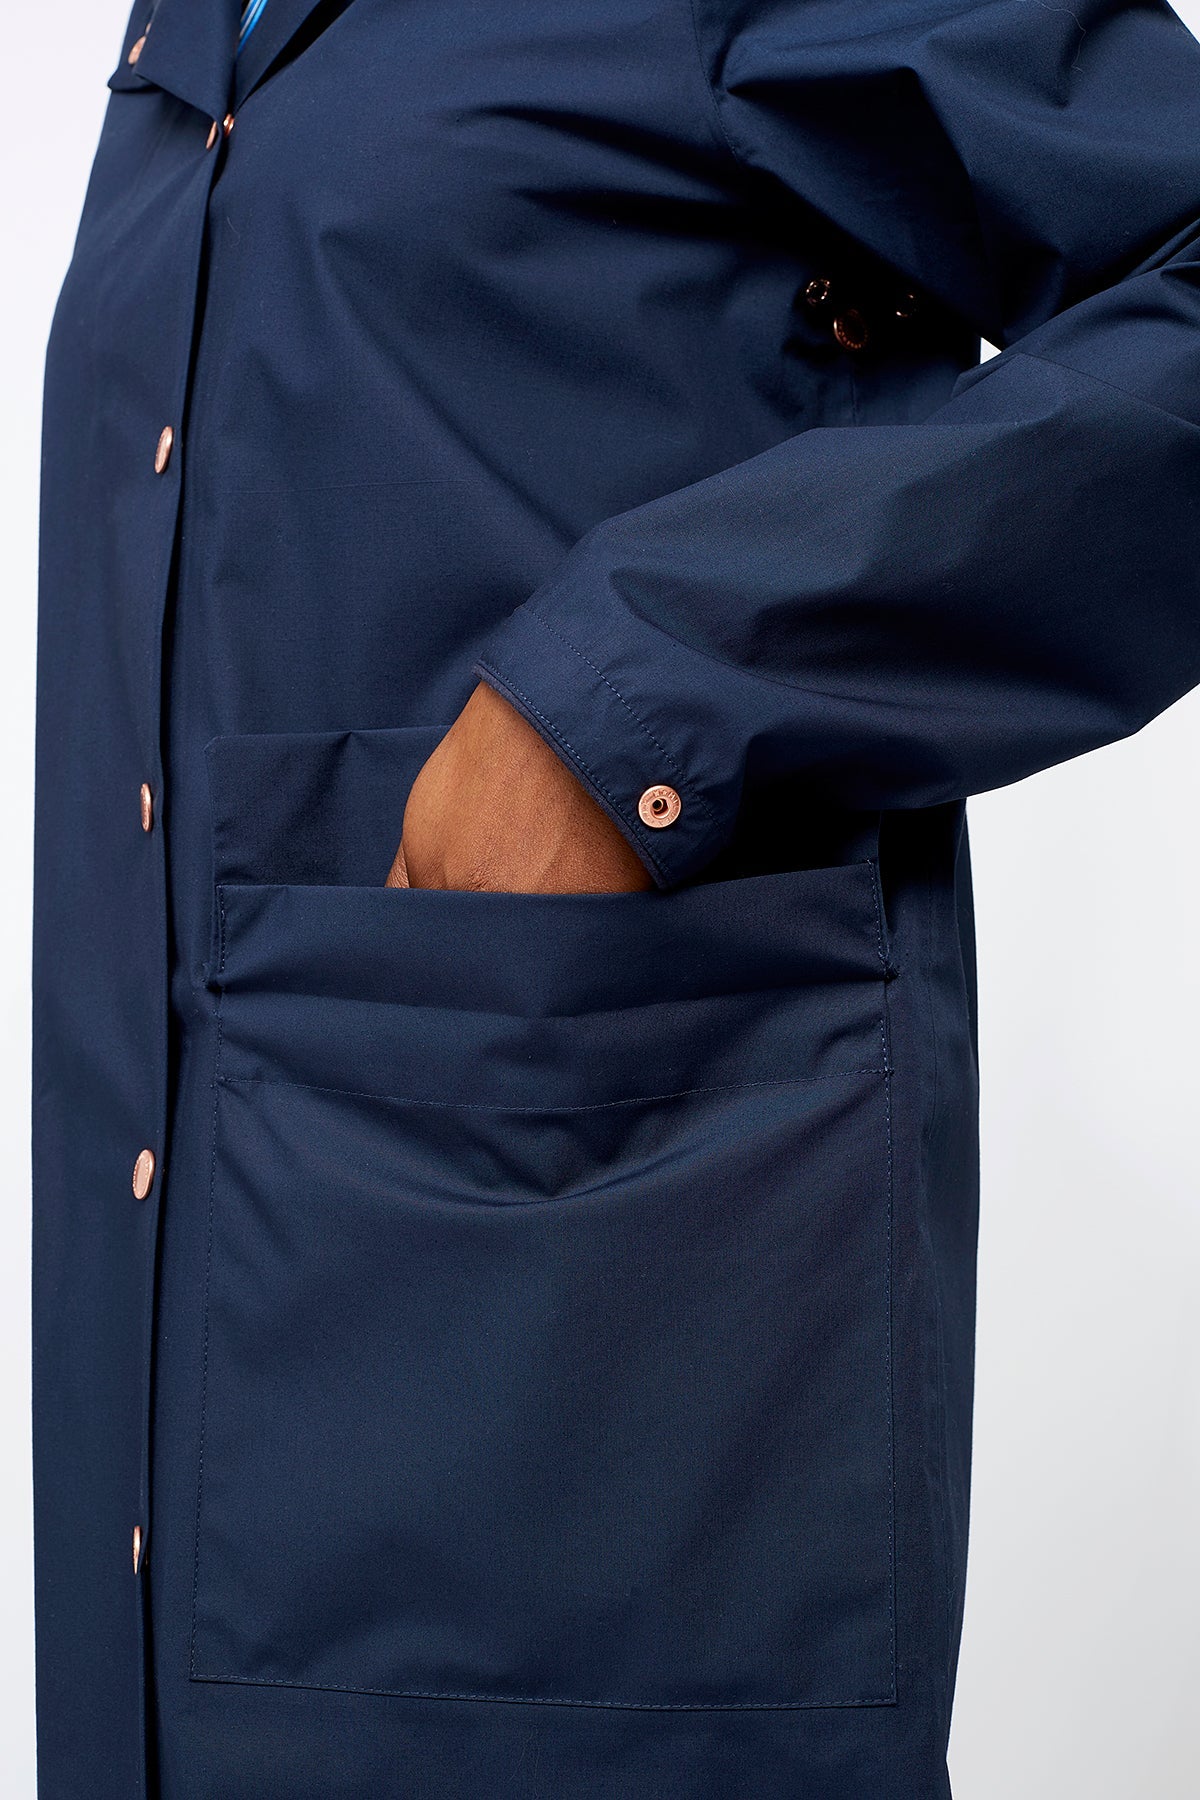 LangerChen  OTTAWA jacket BP / women